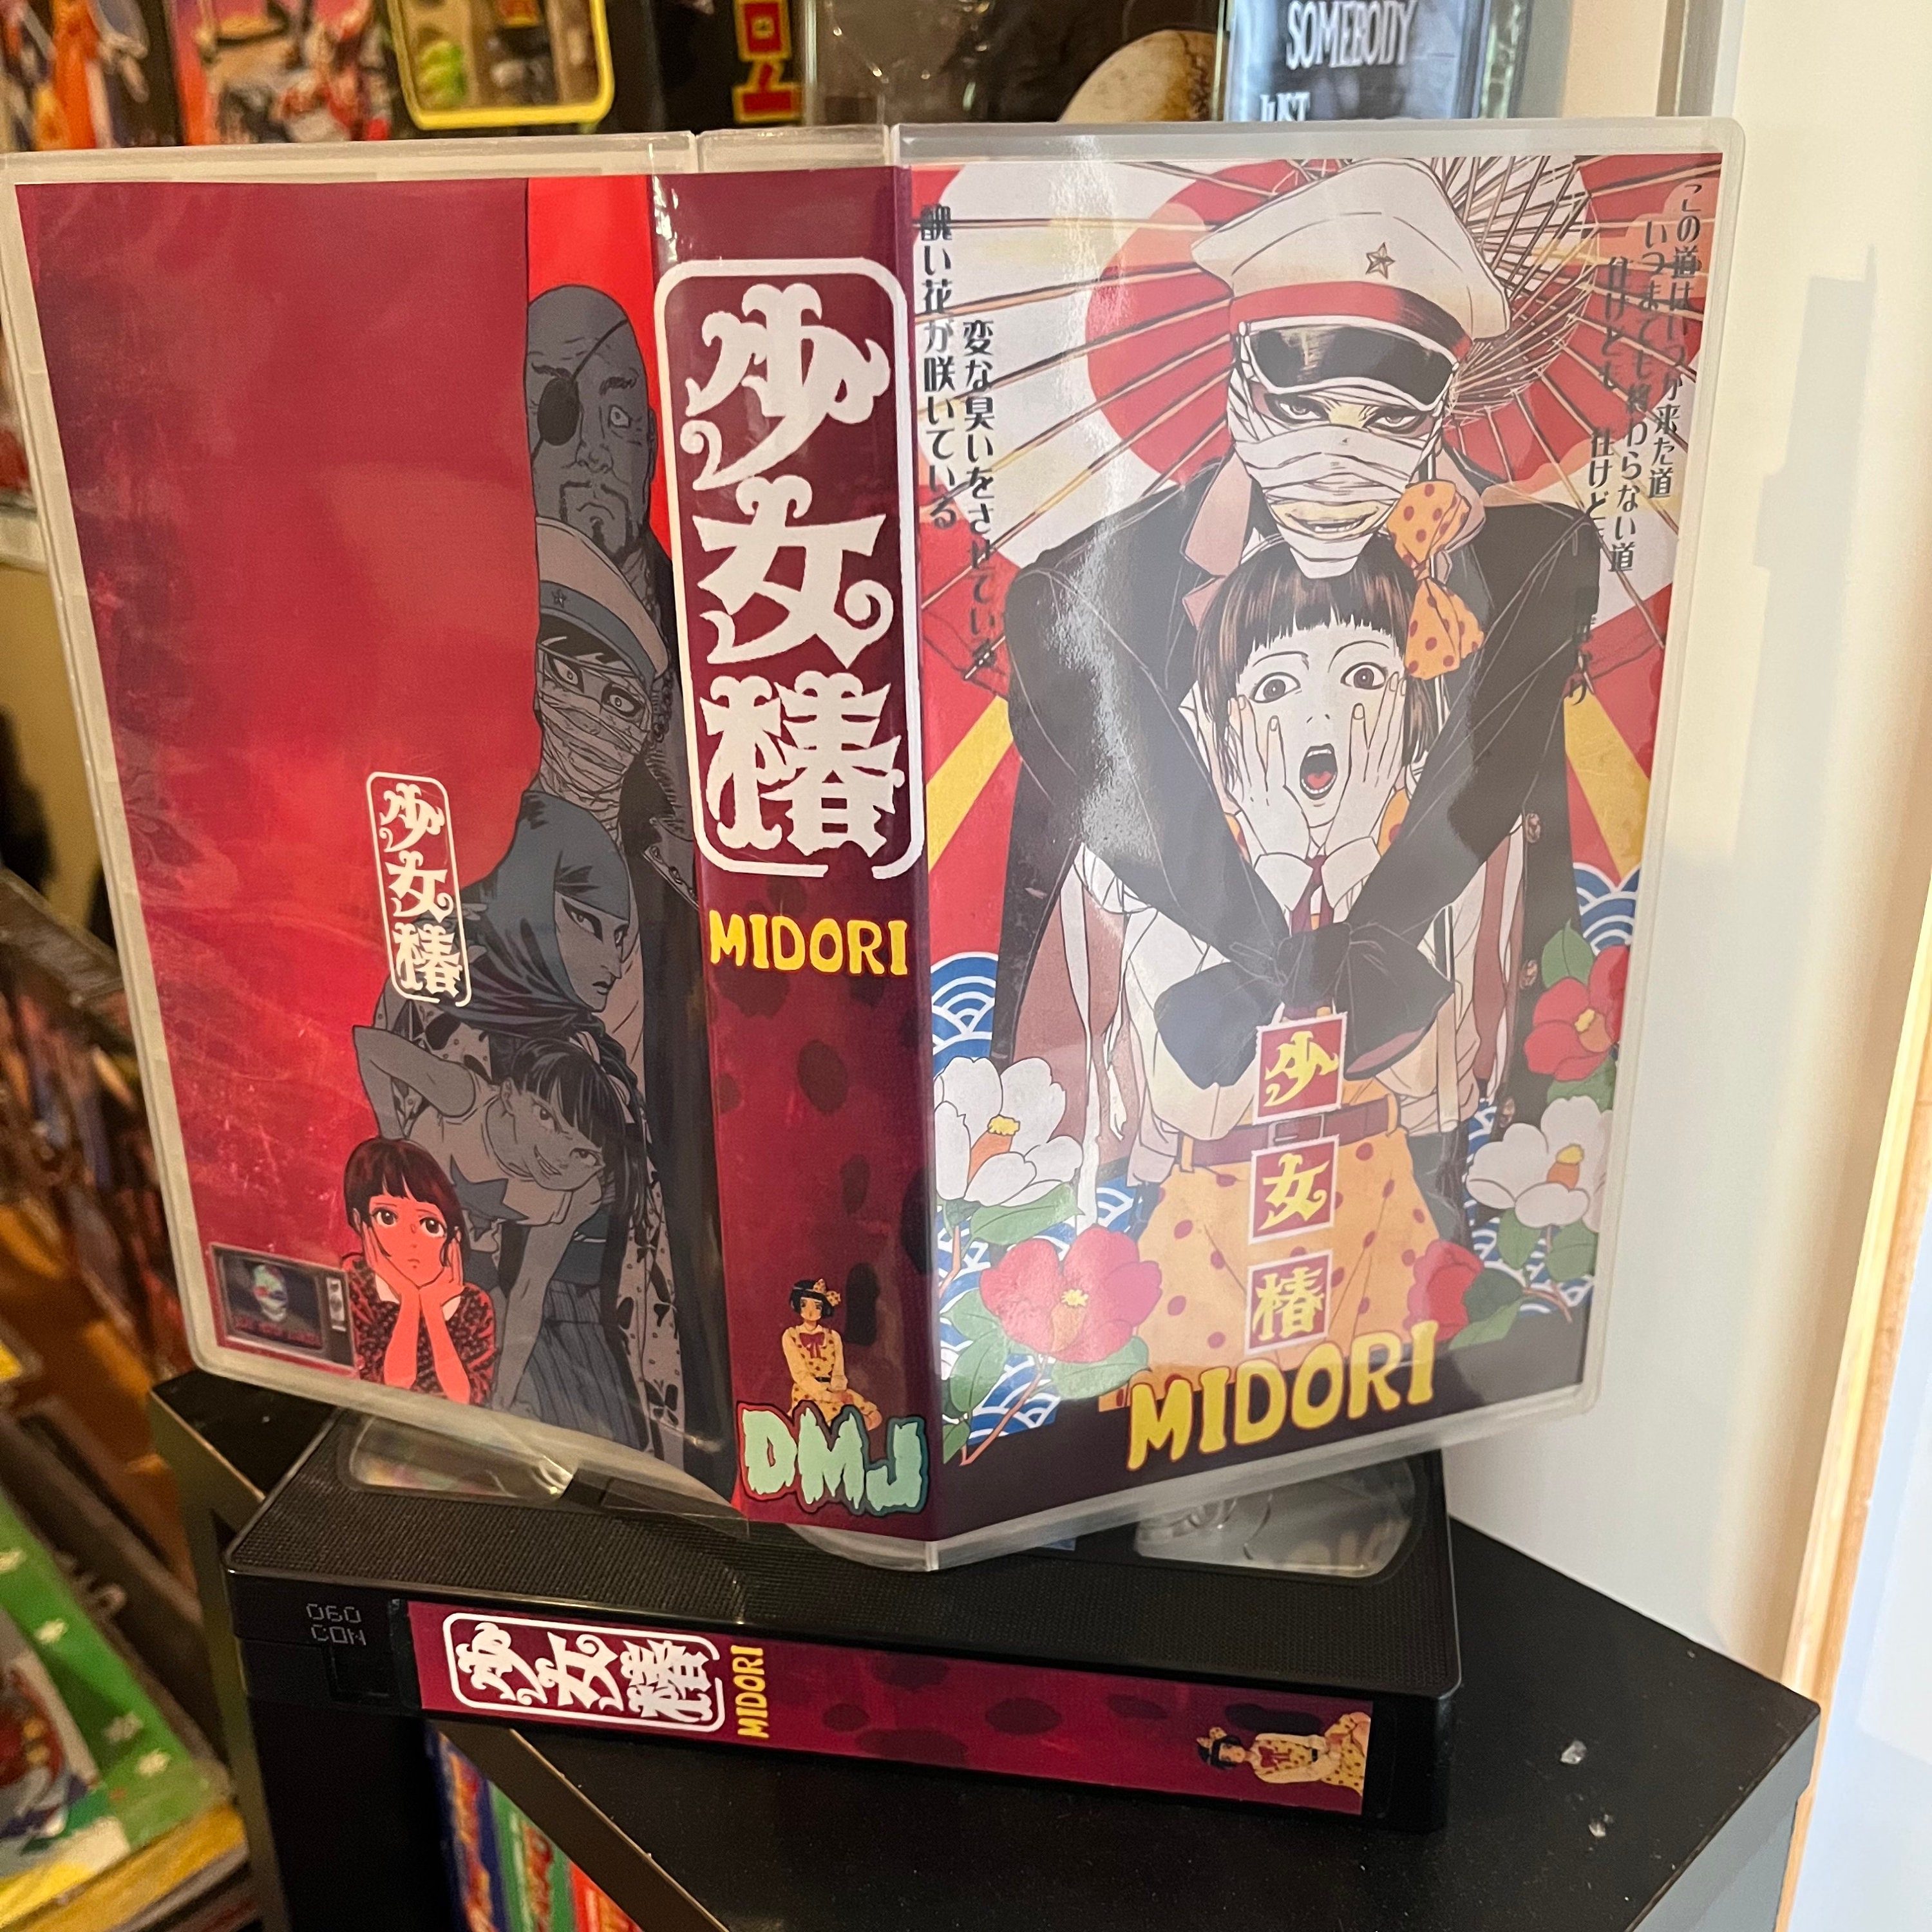 Midari, Anime Kakegurui  Spiral Notebook for Sale by The fandom